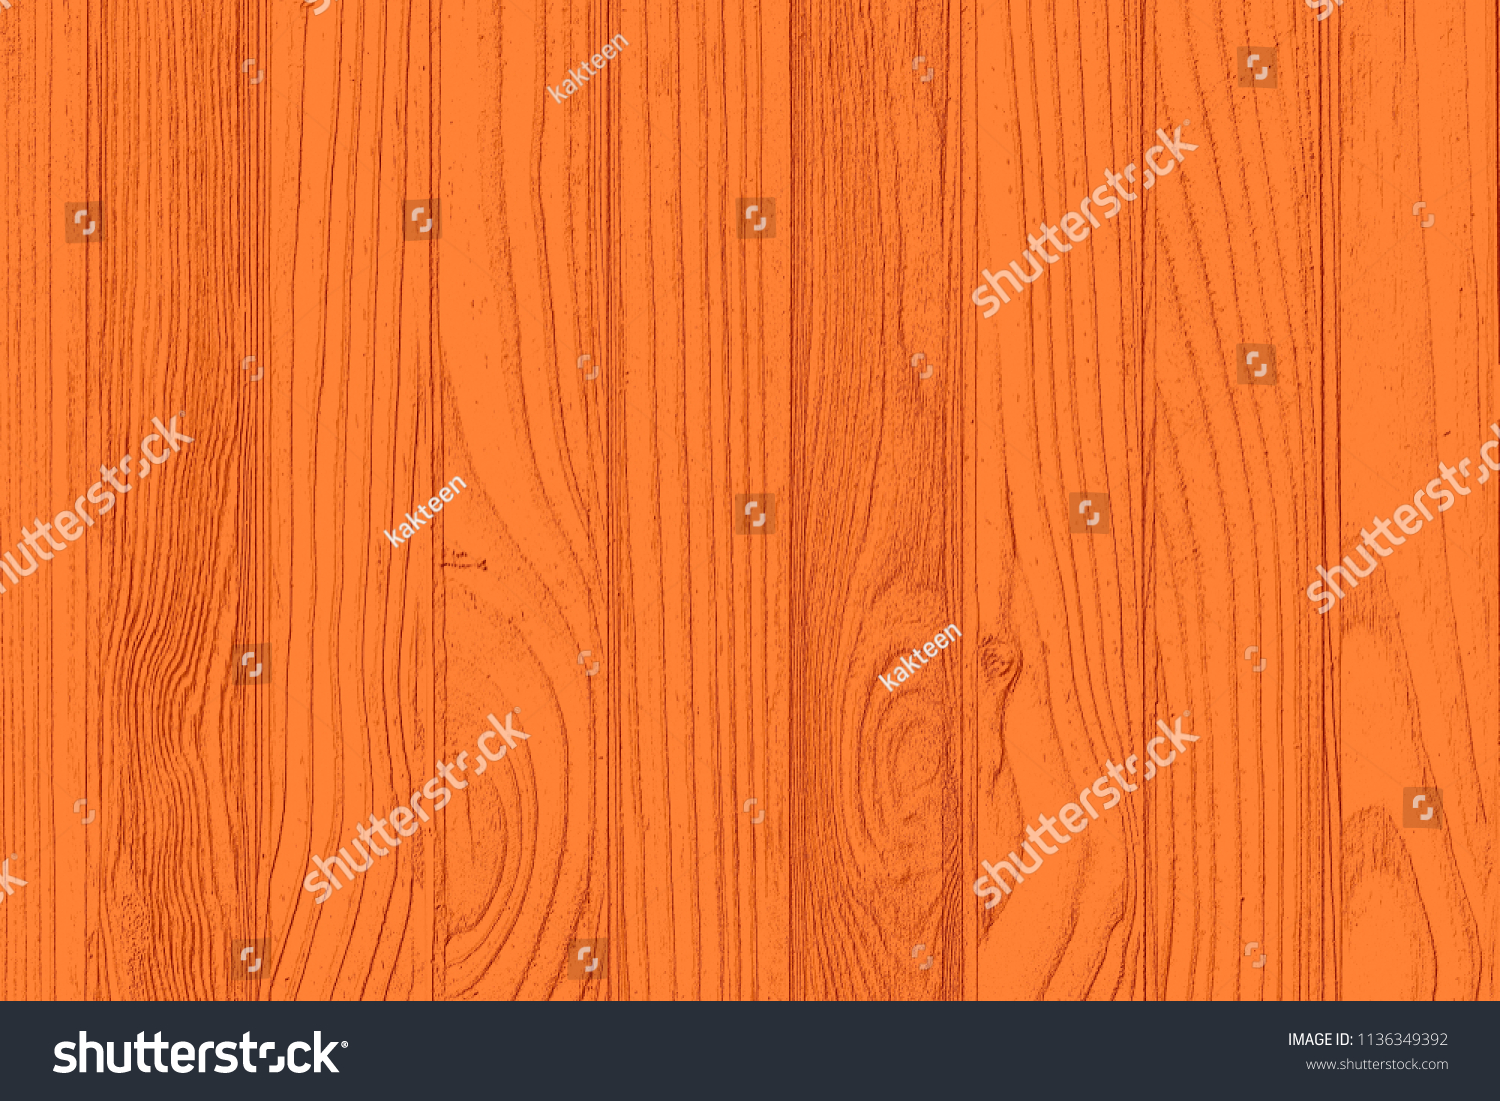 Derbeville test Brace Abnormal Orange Wood Grain Texture Vertical Pine Stock Illustration 1136349392 |  Shutterstock